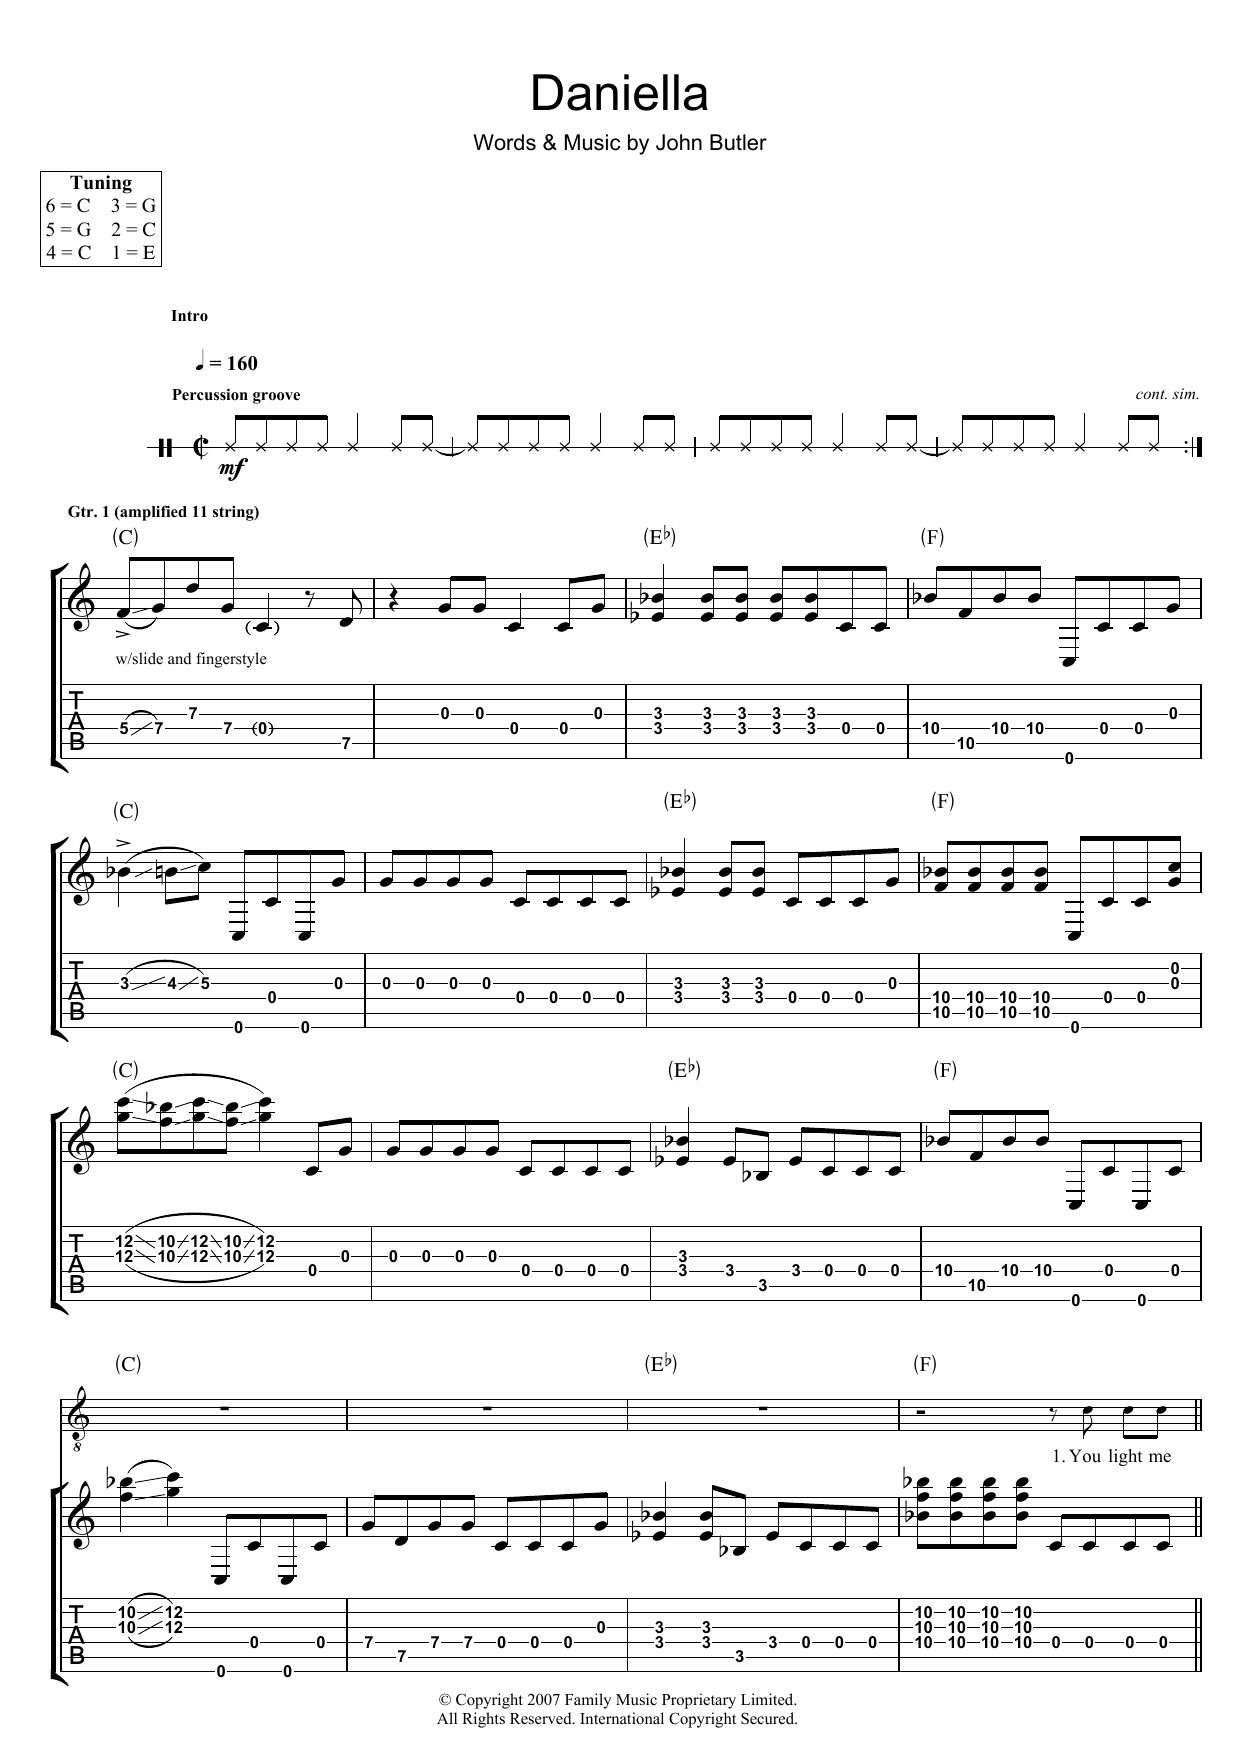 John Butler Daniella Sheet Music Notes & Chords for Guitar Tab - Download or Print PDF